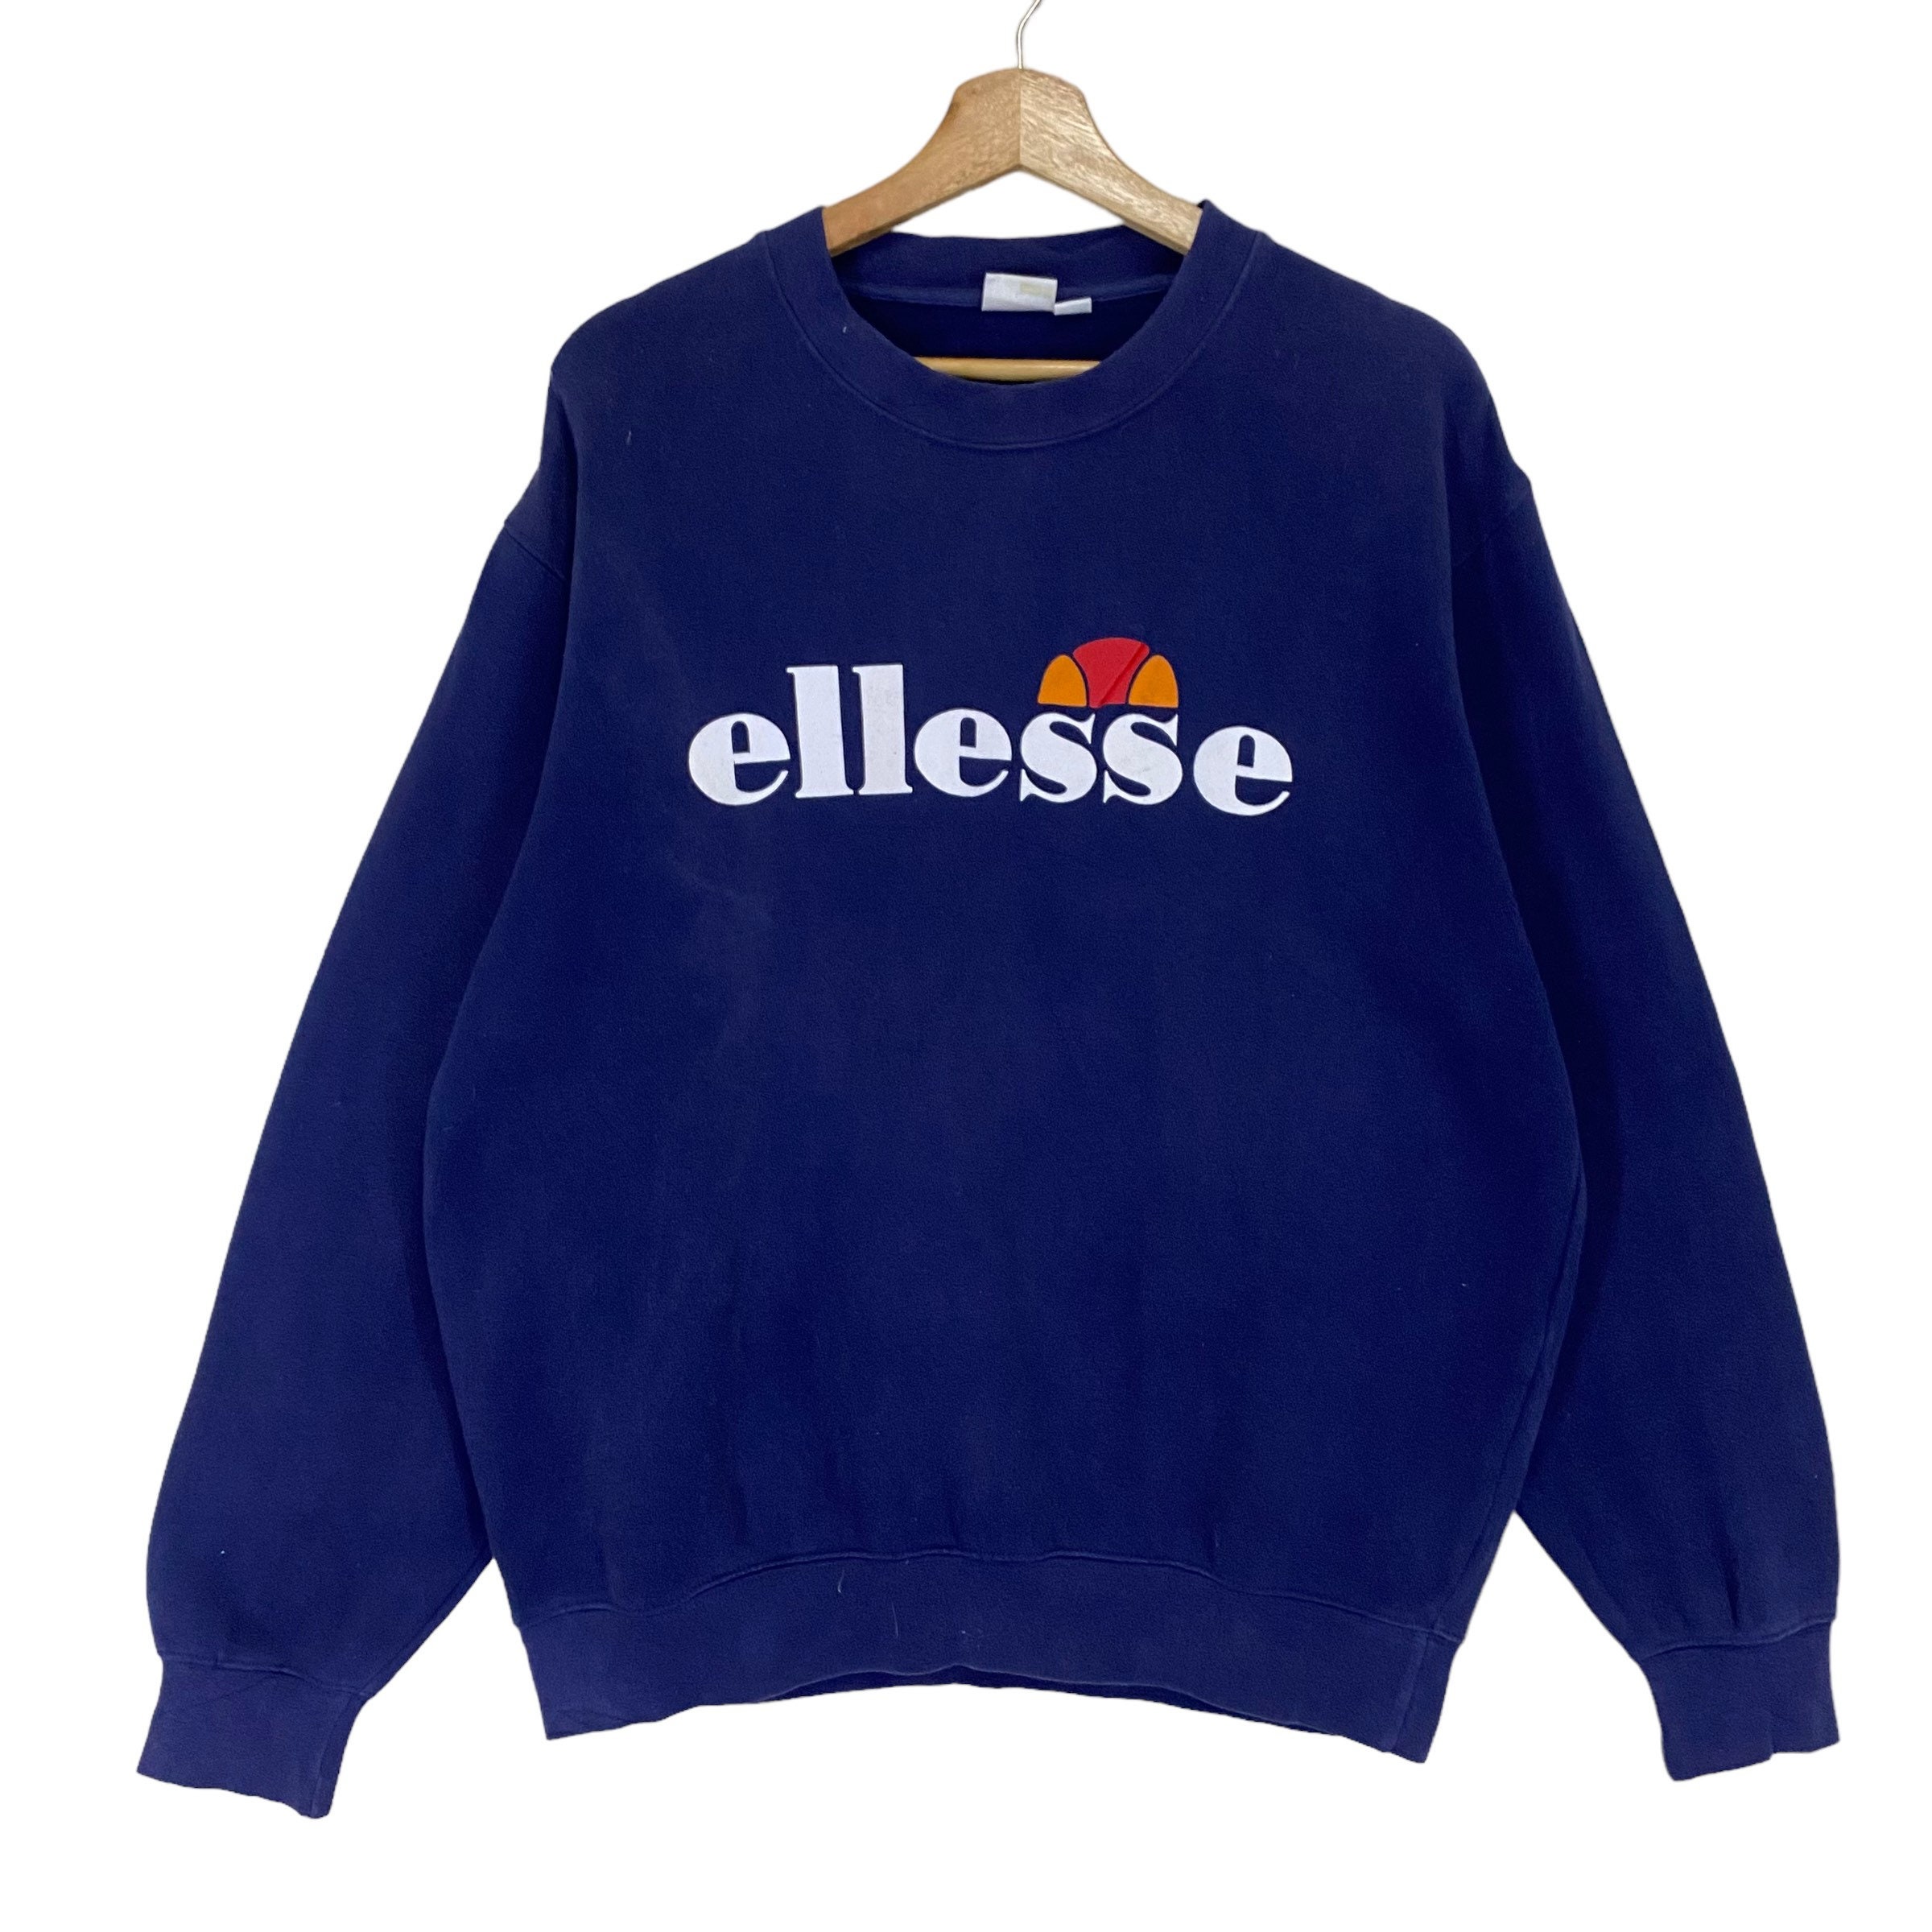 Ellesse Sweater - Etsy